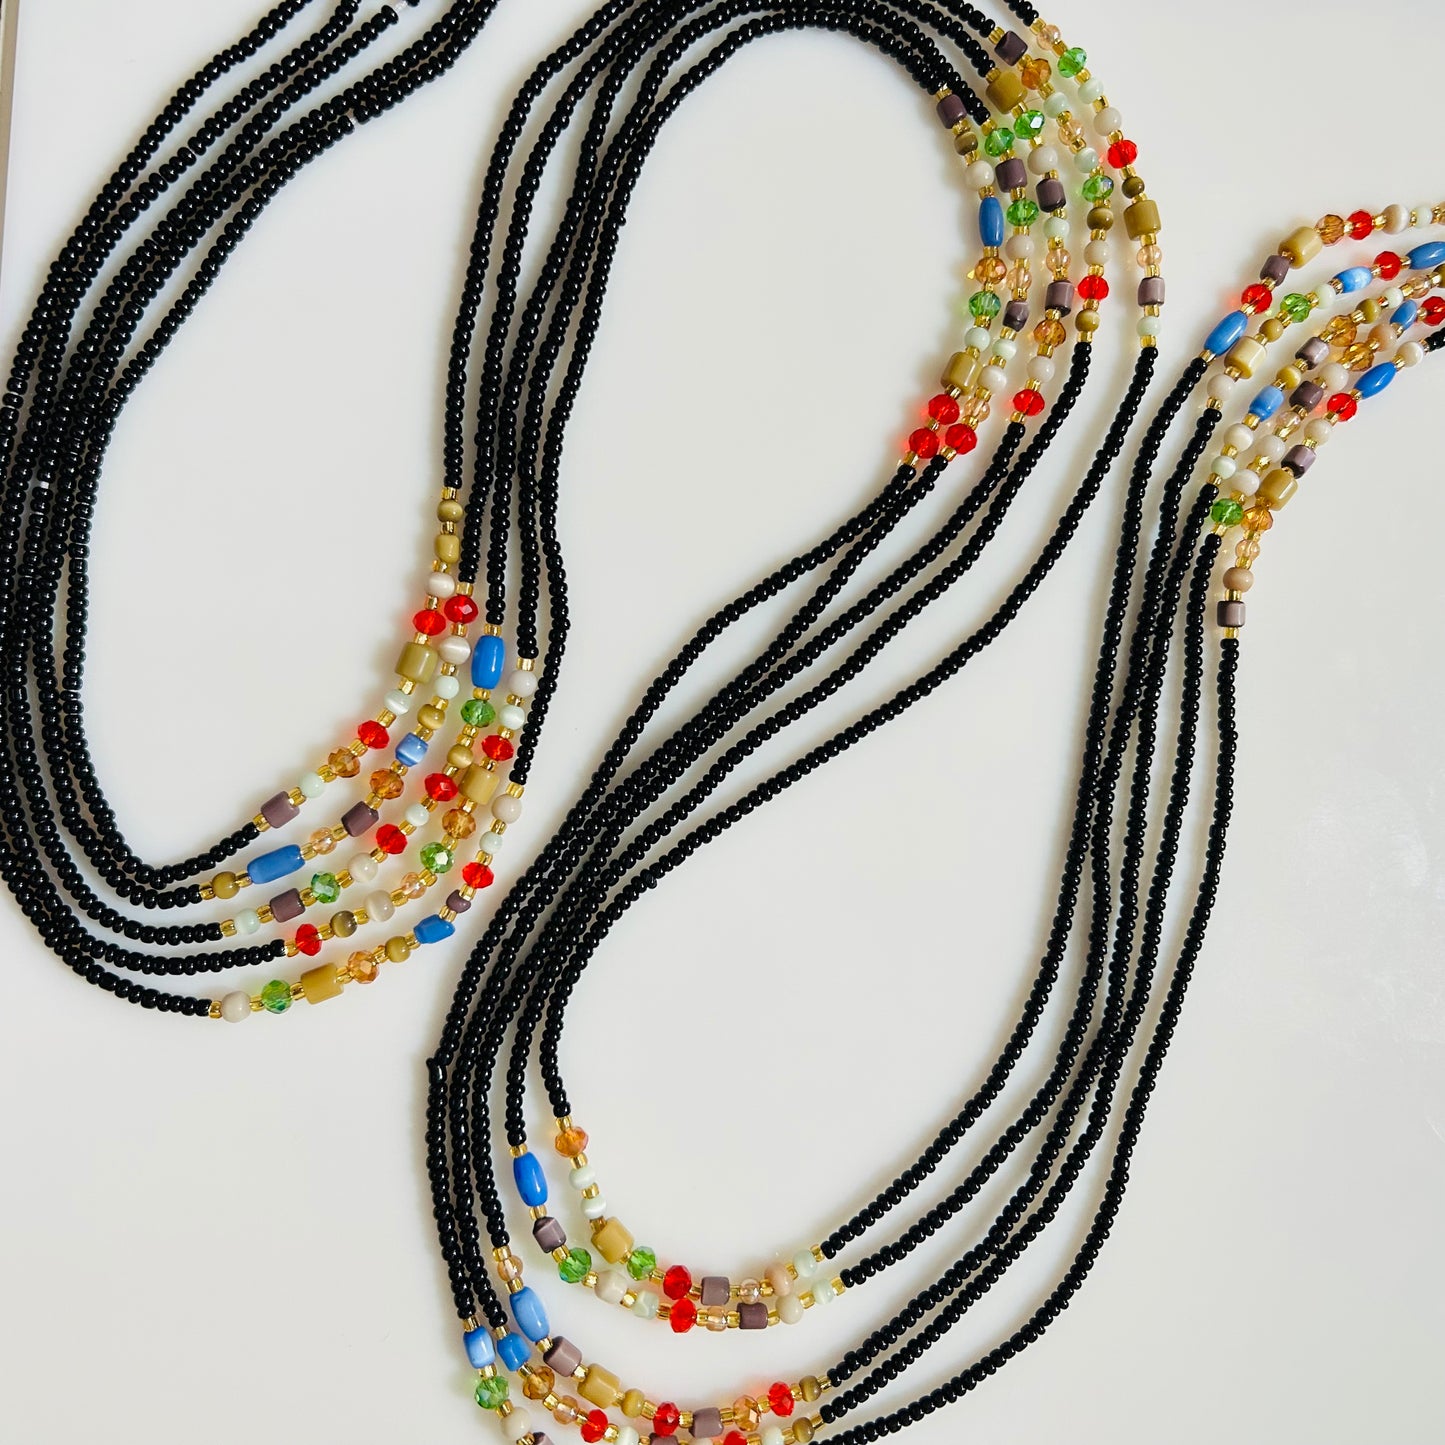 Wholesale Waist Beads